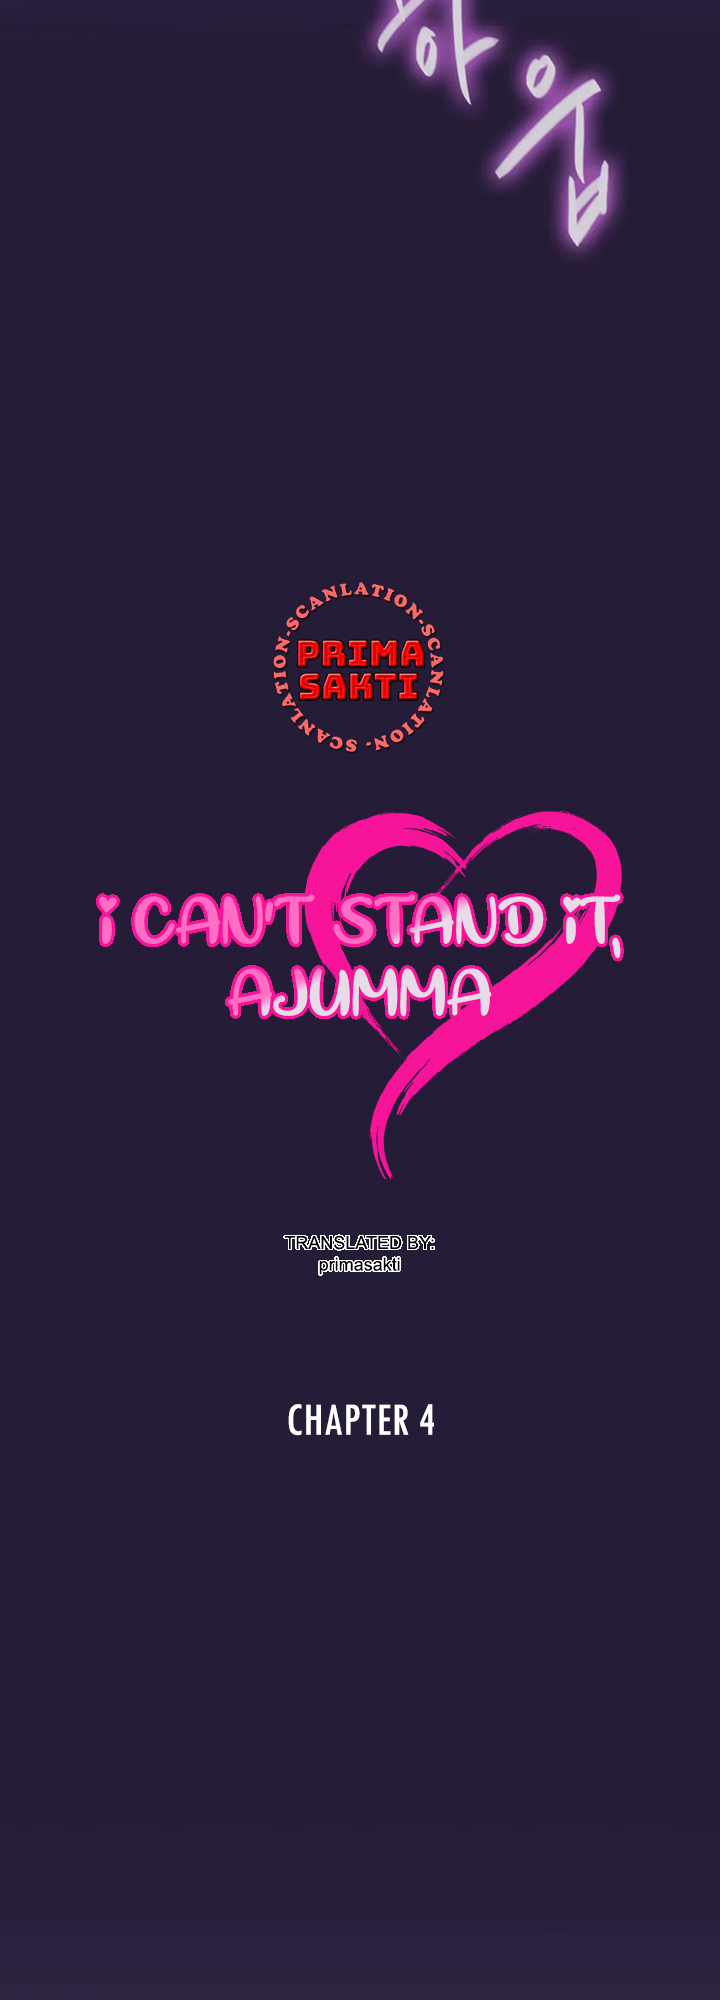 I Can’t Stand It, Ajumma NEW image